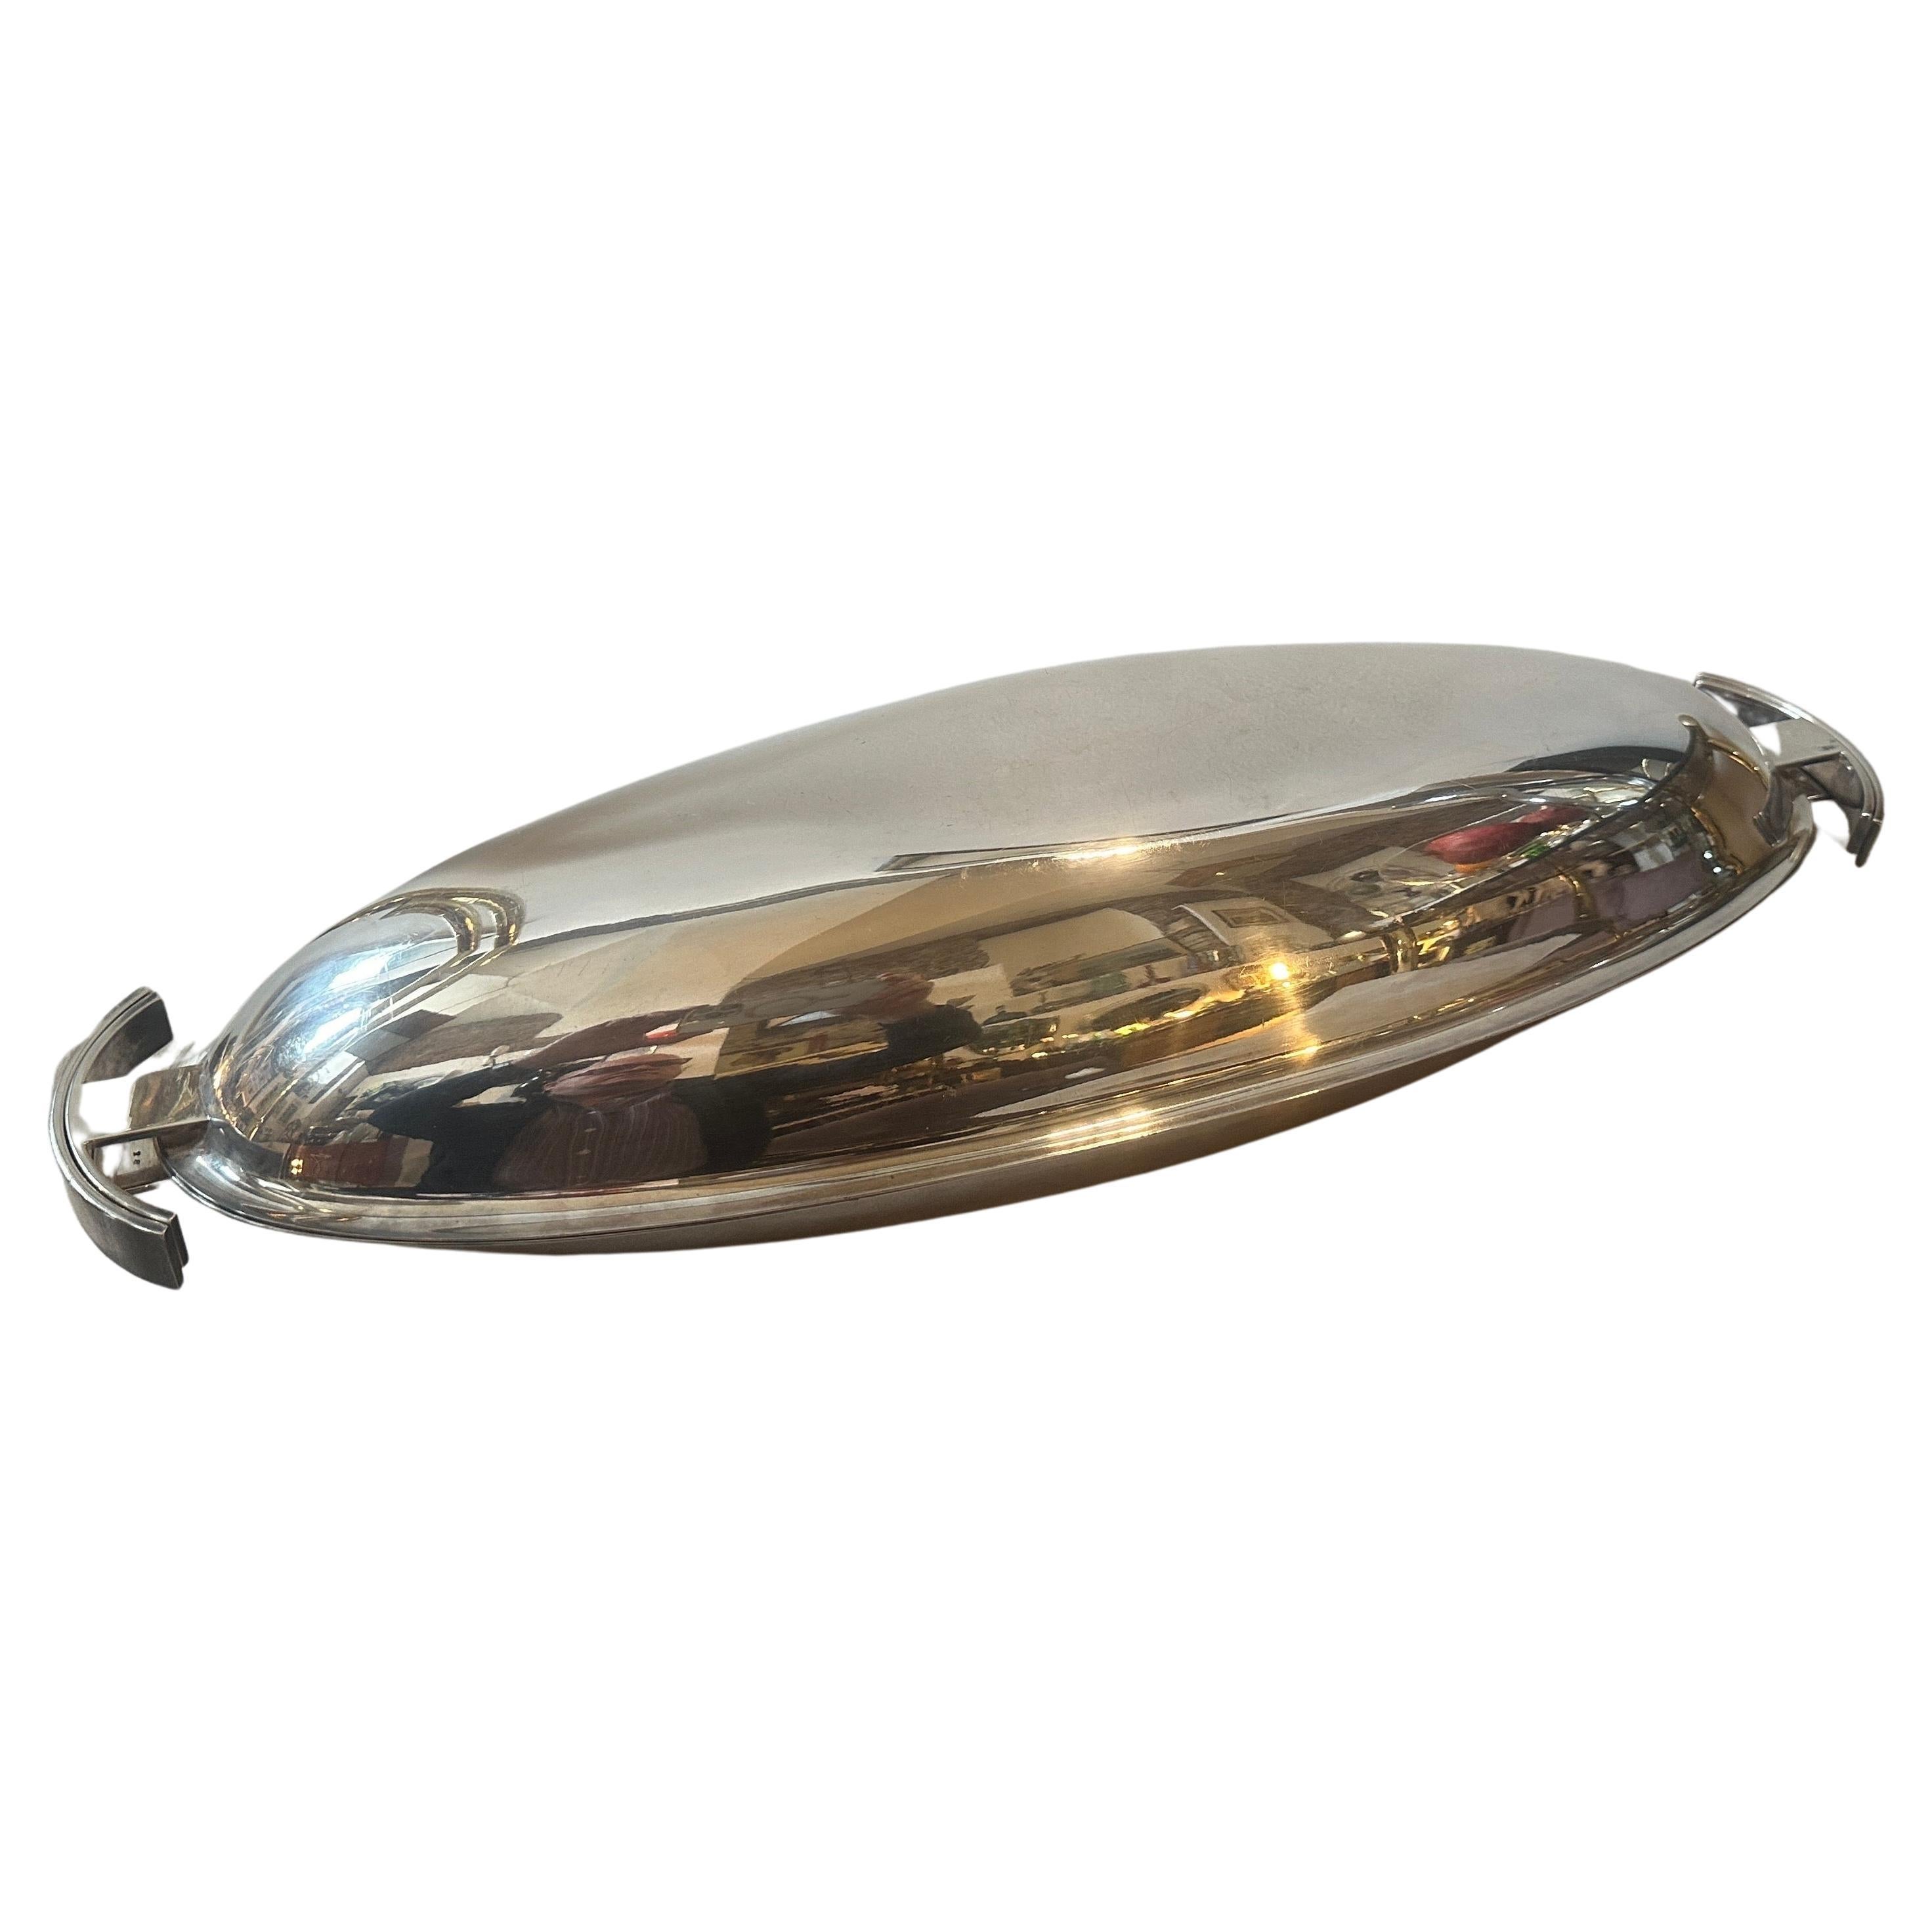 Italian 1990s Lino Modernist Silver Plated Fish Bowl Design by Lino Sabattini For Sale